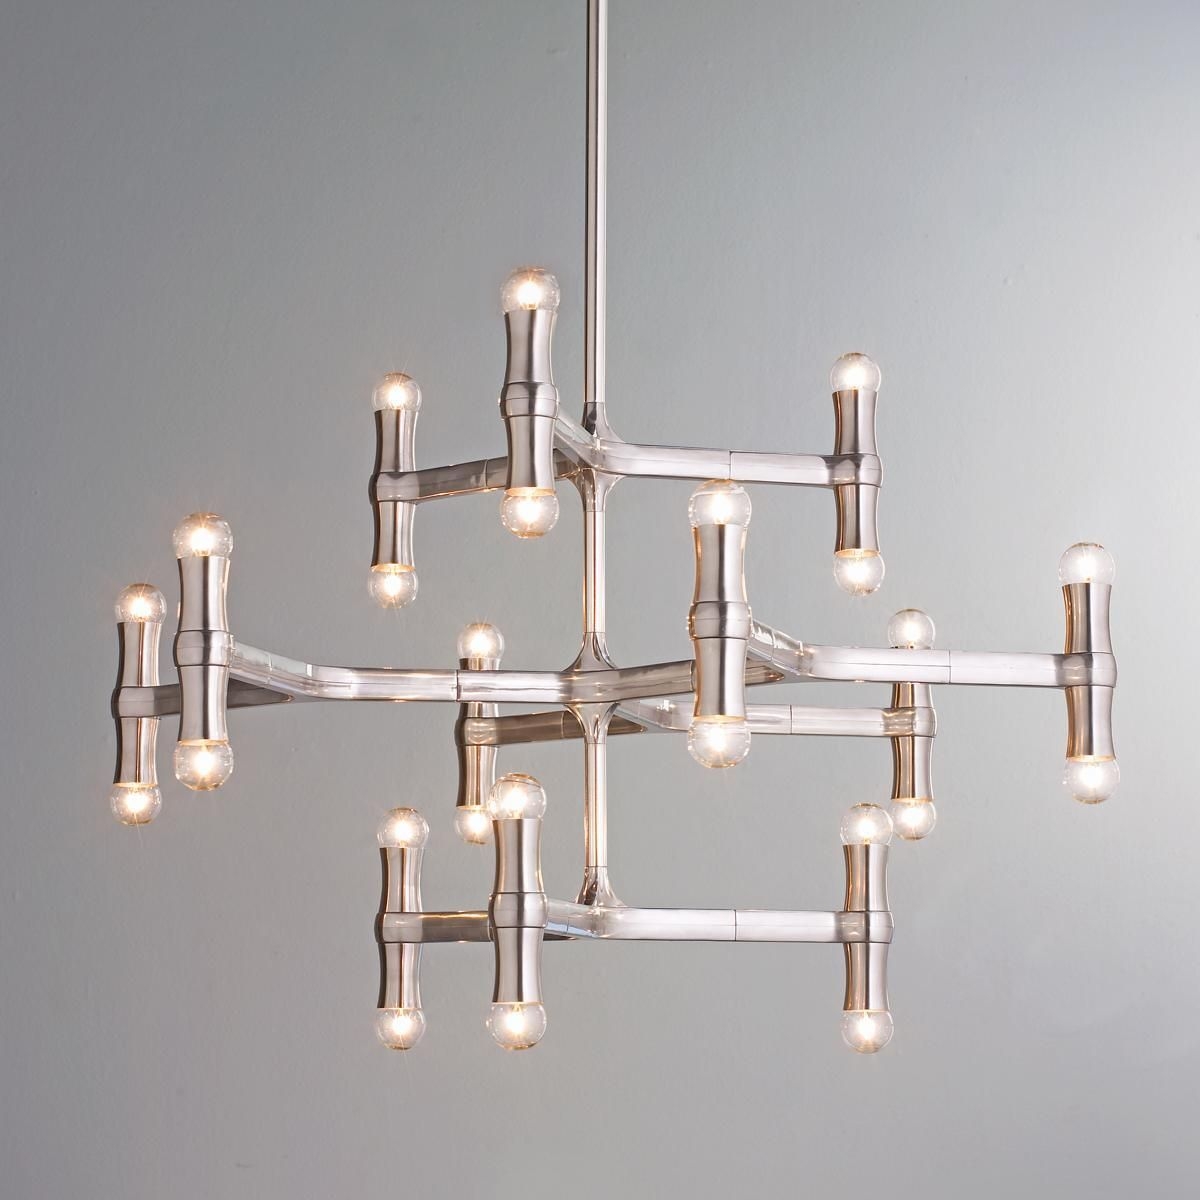 Modern bamboo inspired chandelierthis dramatic bamboo inspired shape chandelier is